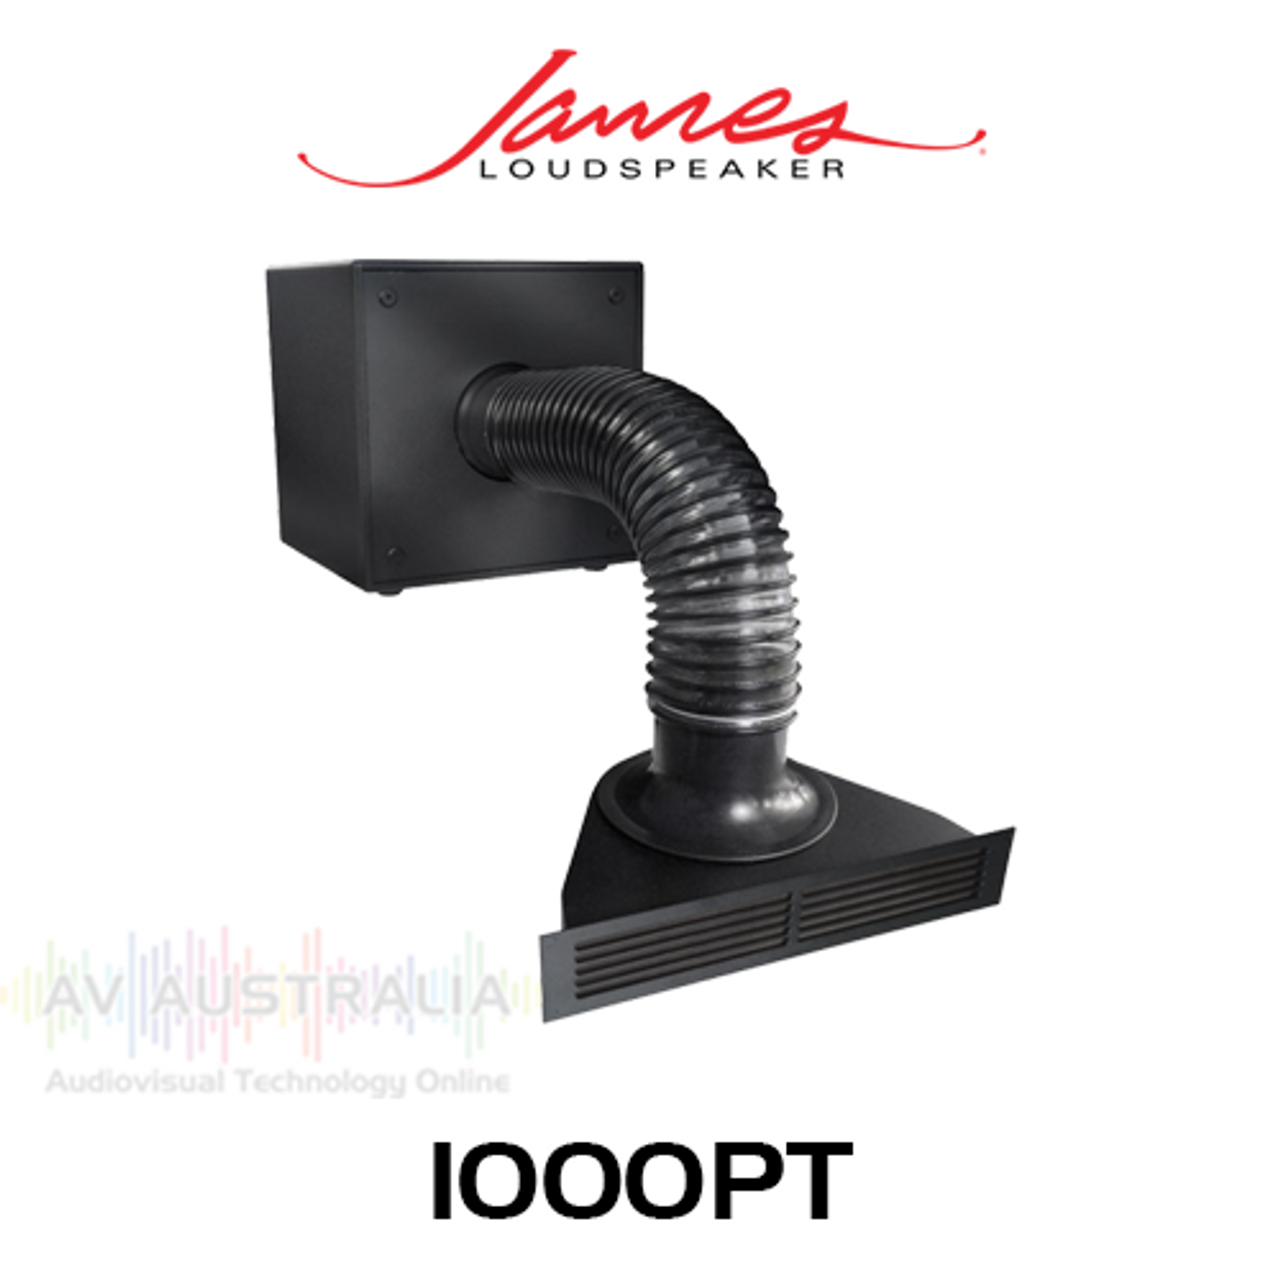 James Loudspeaker 1000PT 10" PowerPipe Subwoofer